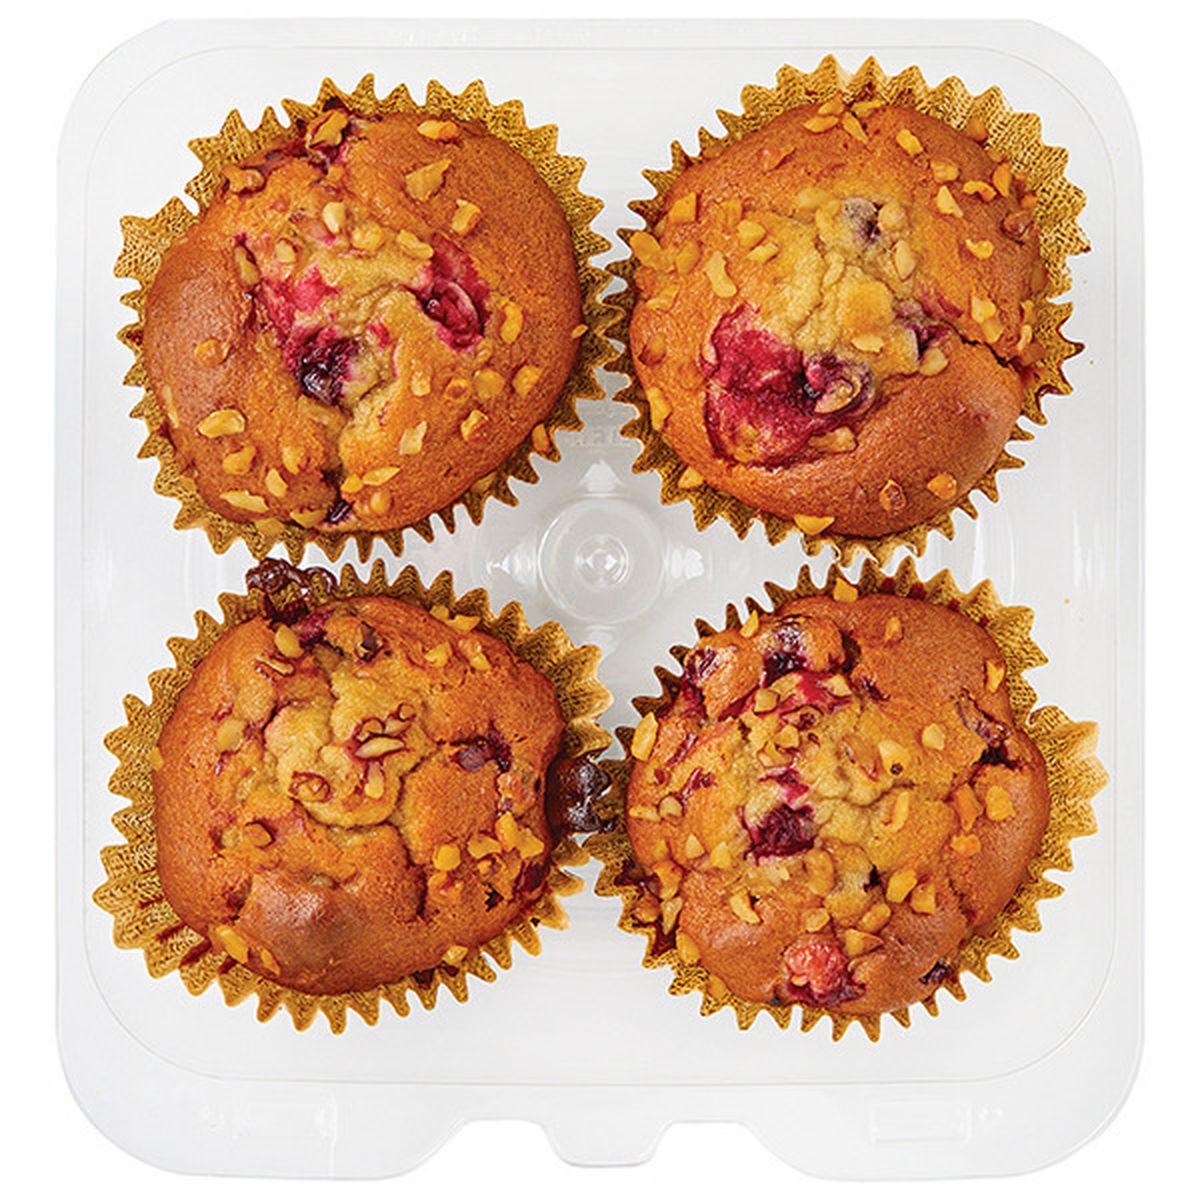 Calories in Wegmans Muffins, Cranberry Nut, 4 Pack